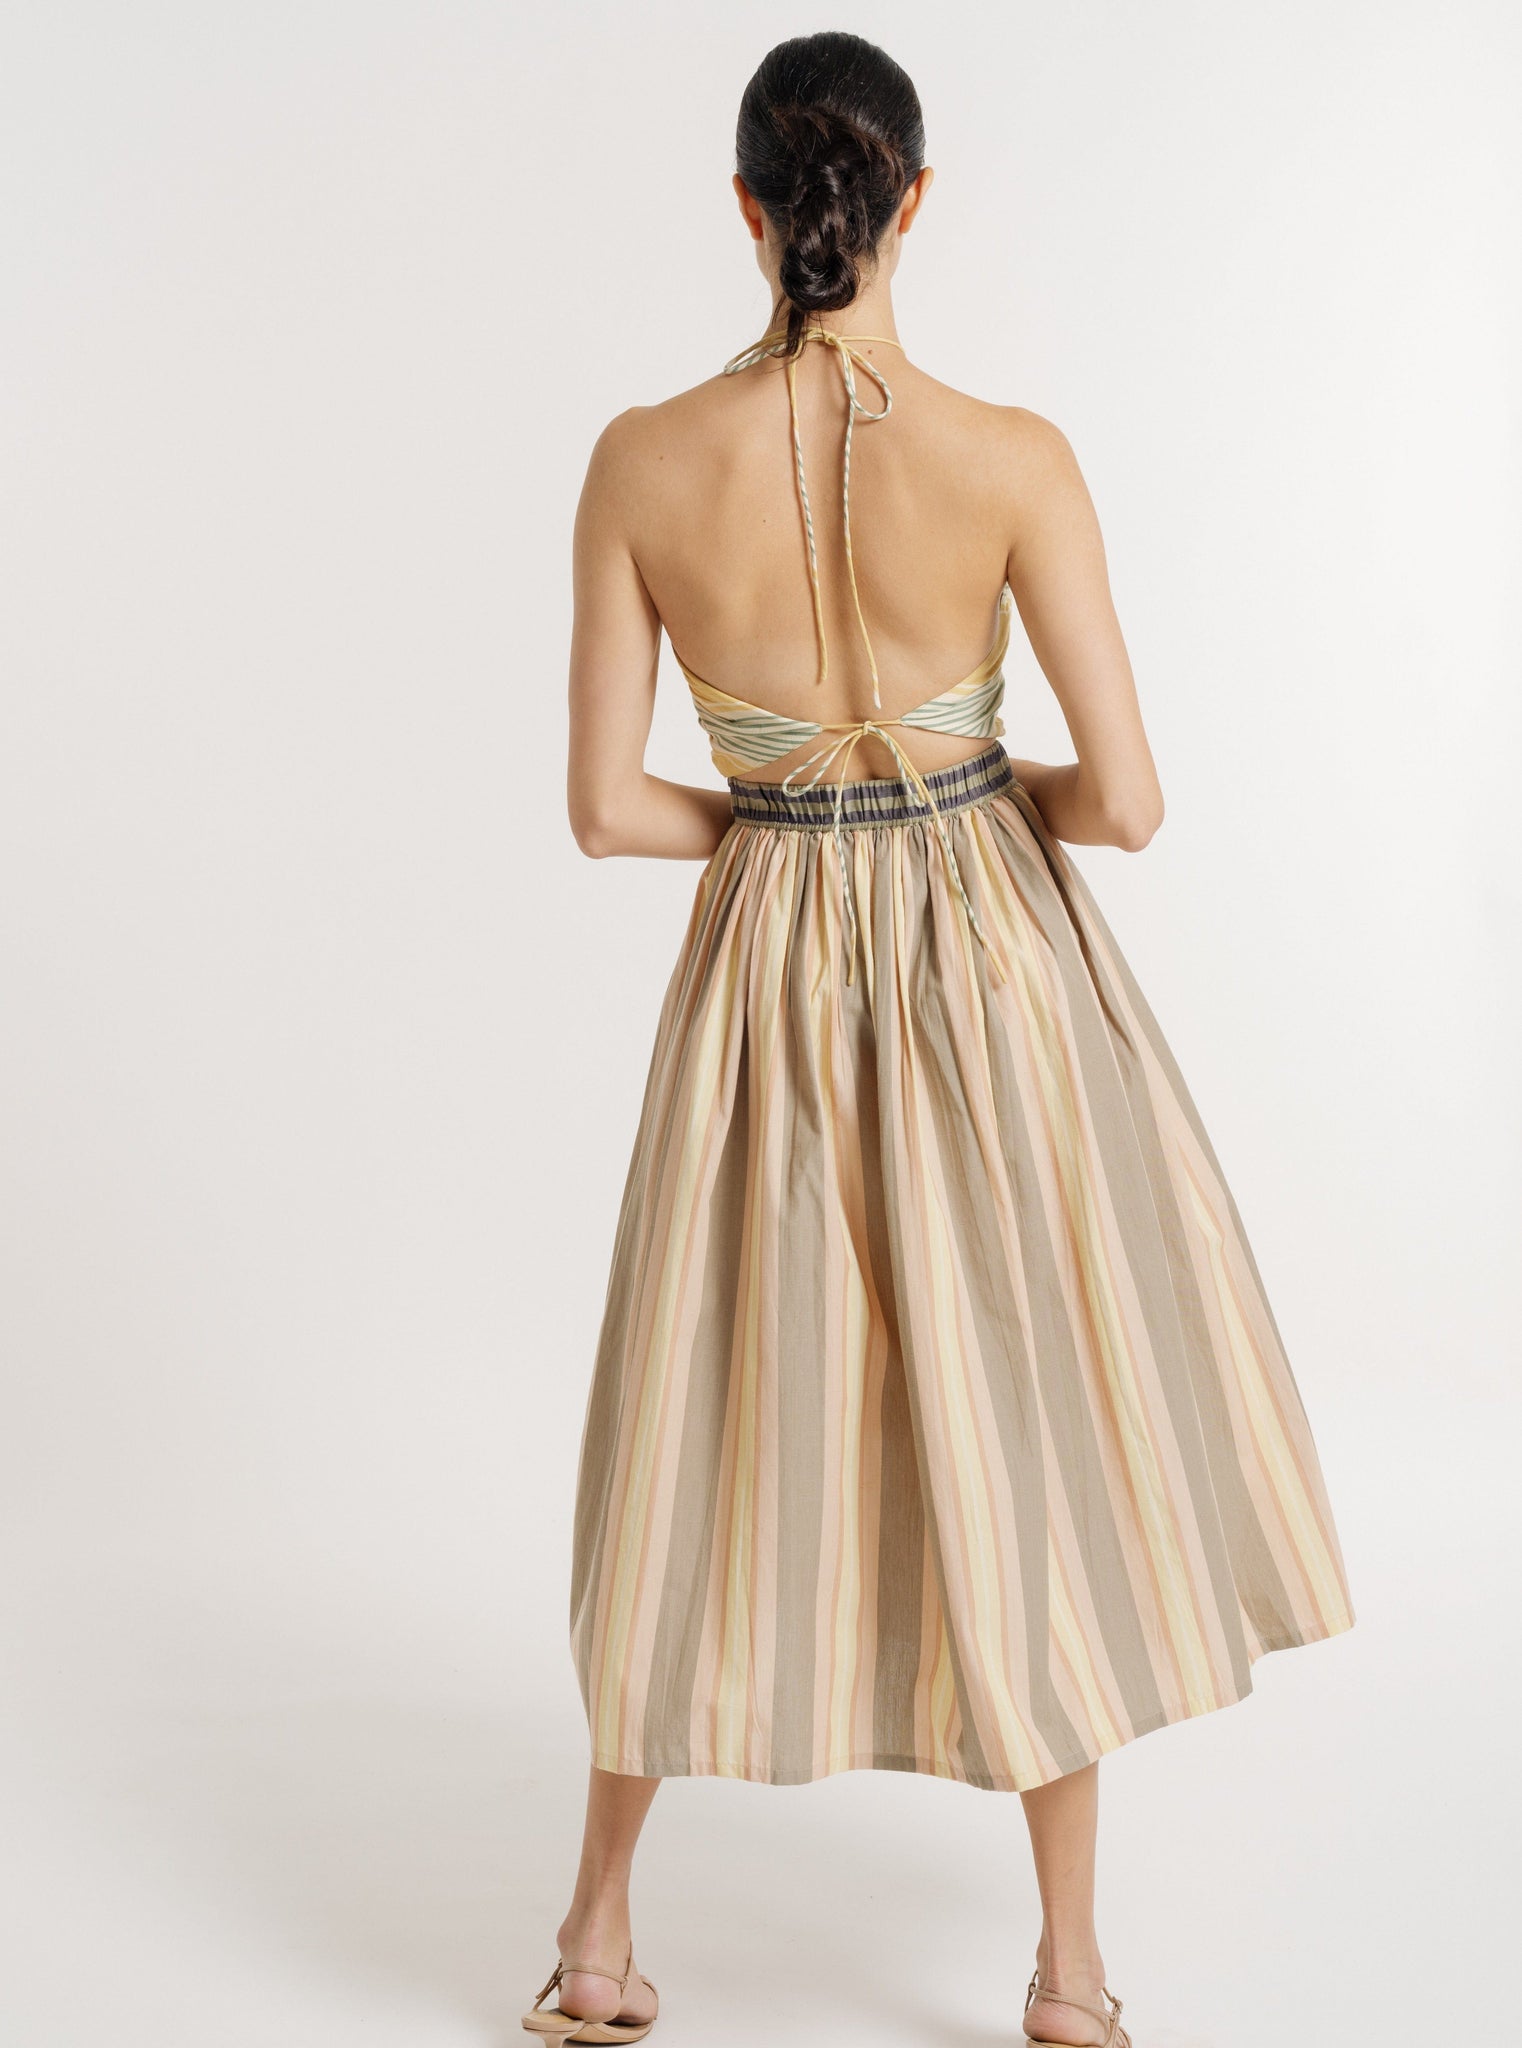 Keyhole Halter Dress - Sunbleached Sorbet Stripe - Sample